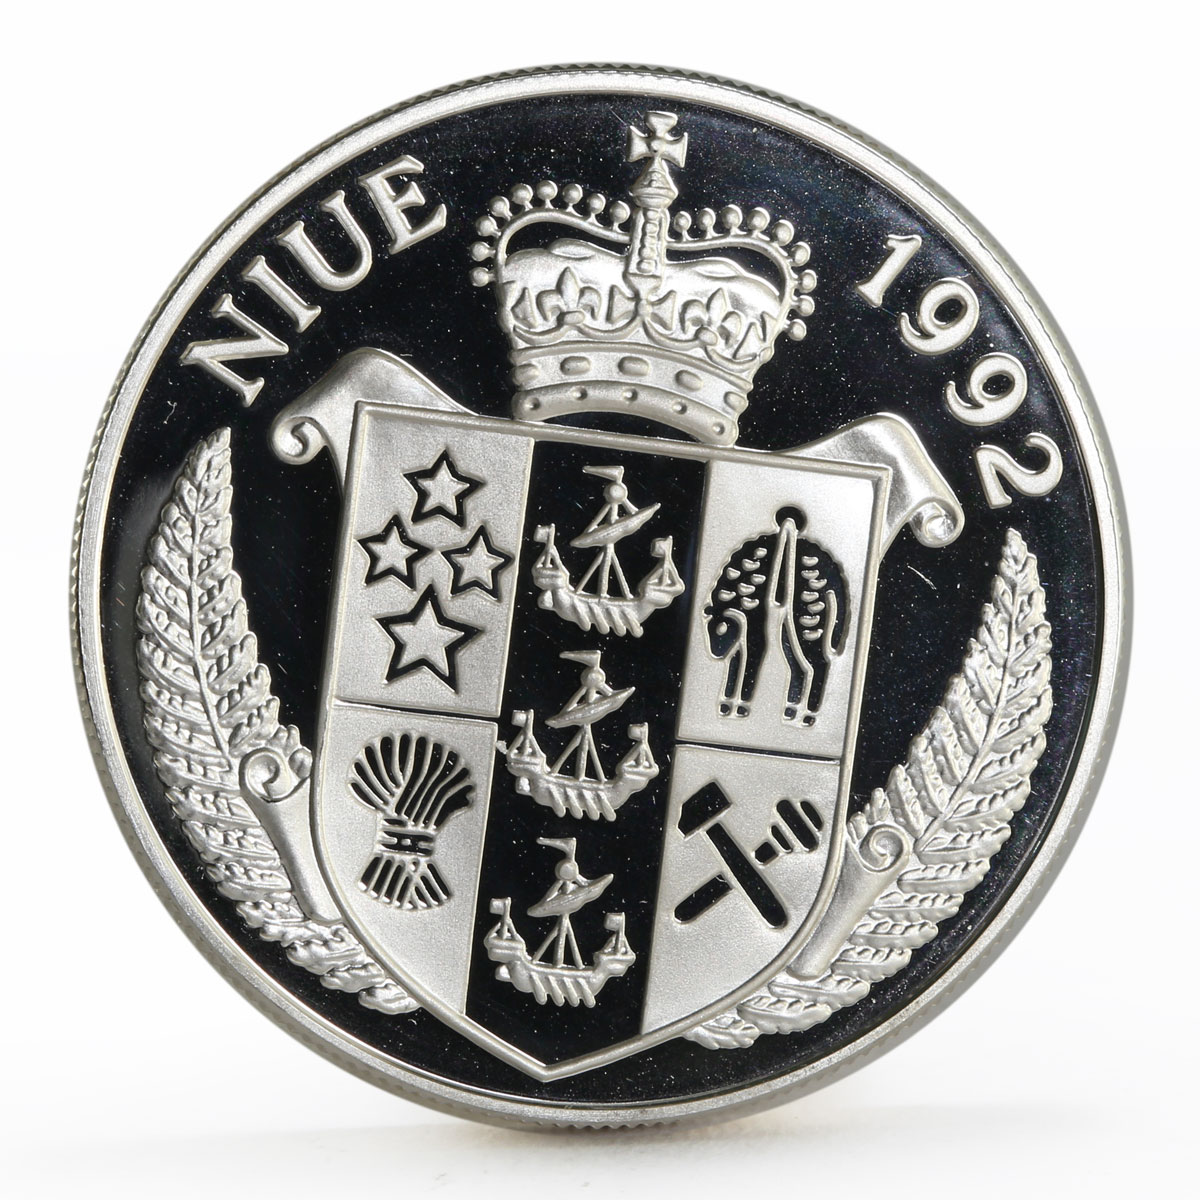 Niue 10 dollars Wernher Von Braun and The Rocket Launch proof silver coin 1992